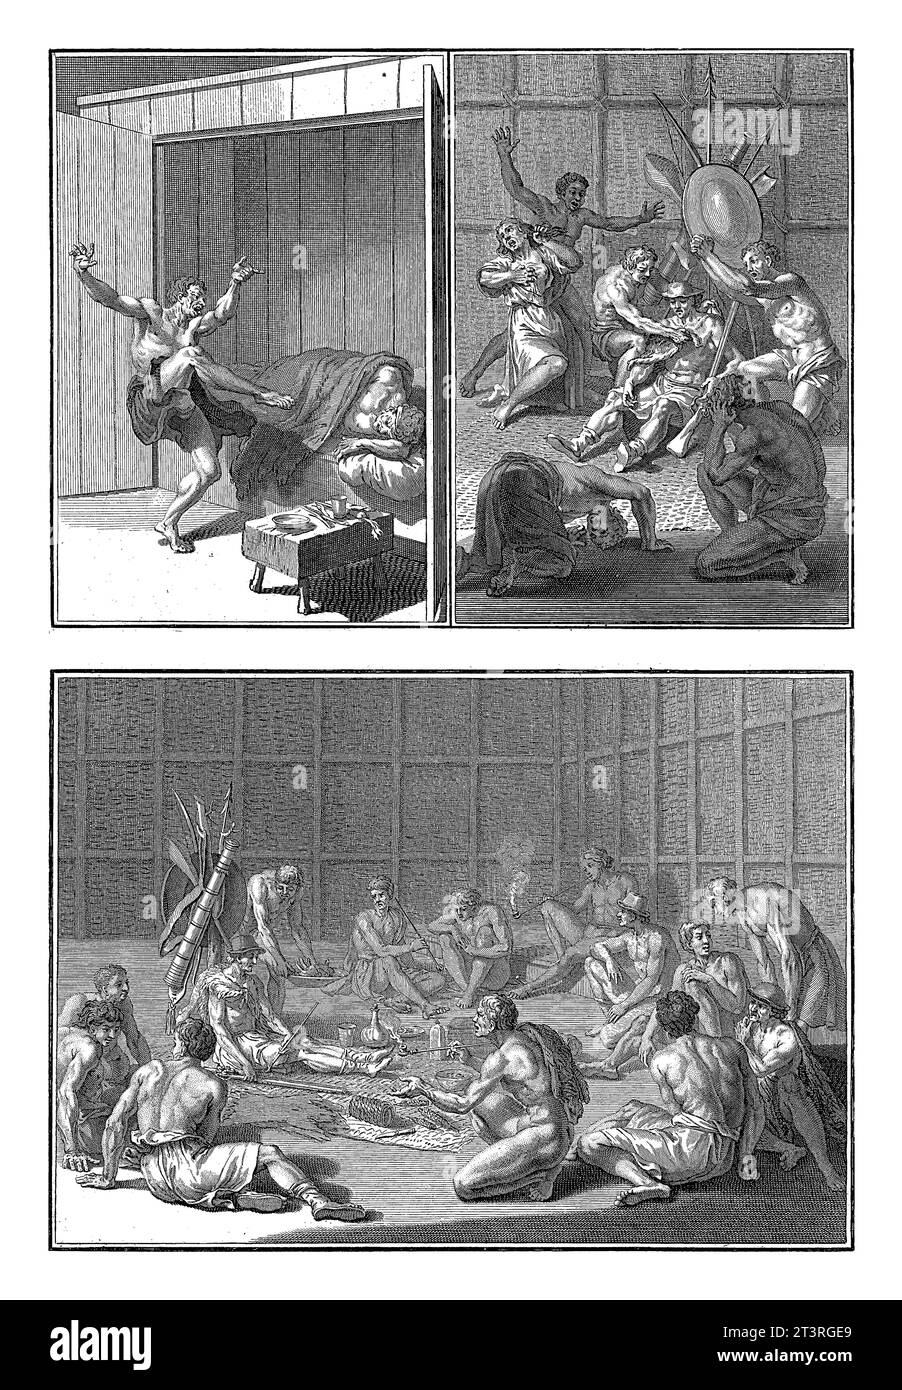 Rituale unter kanadischen Indianern, Bernard Picart (Werkstatt), nach Bernard Picart, 1723 Blatt mit drei Darstellungen von Ritualen unter kanadischen in Stockfoto